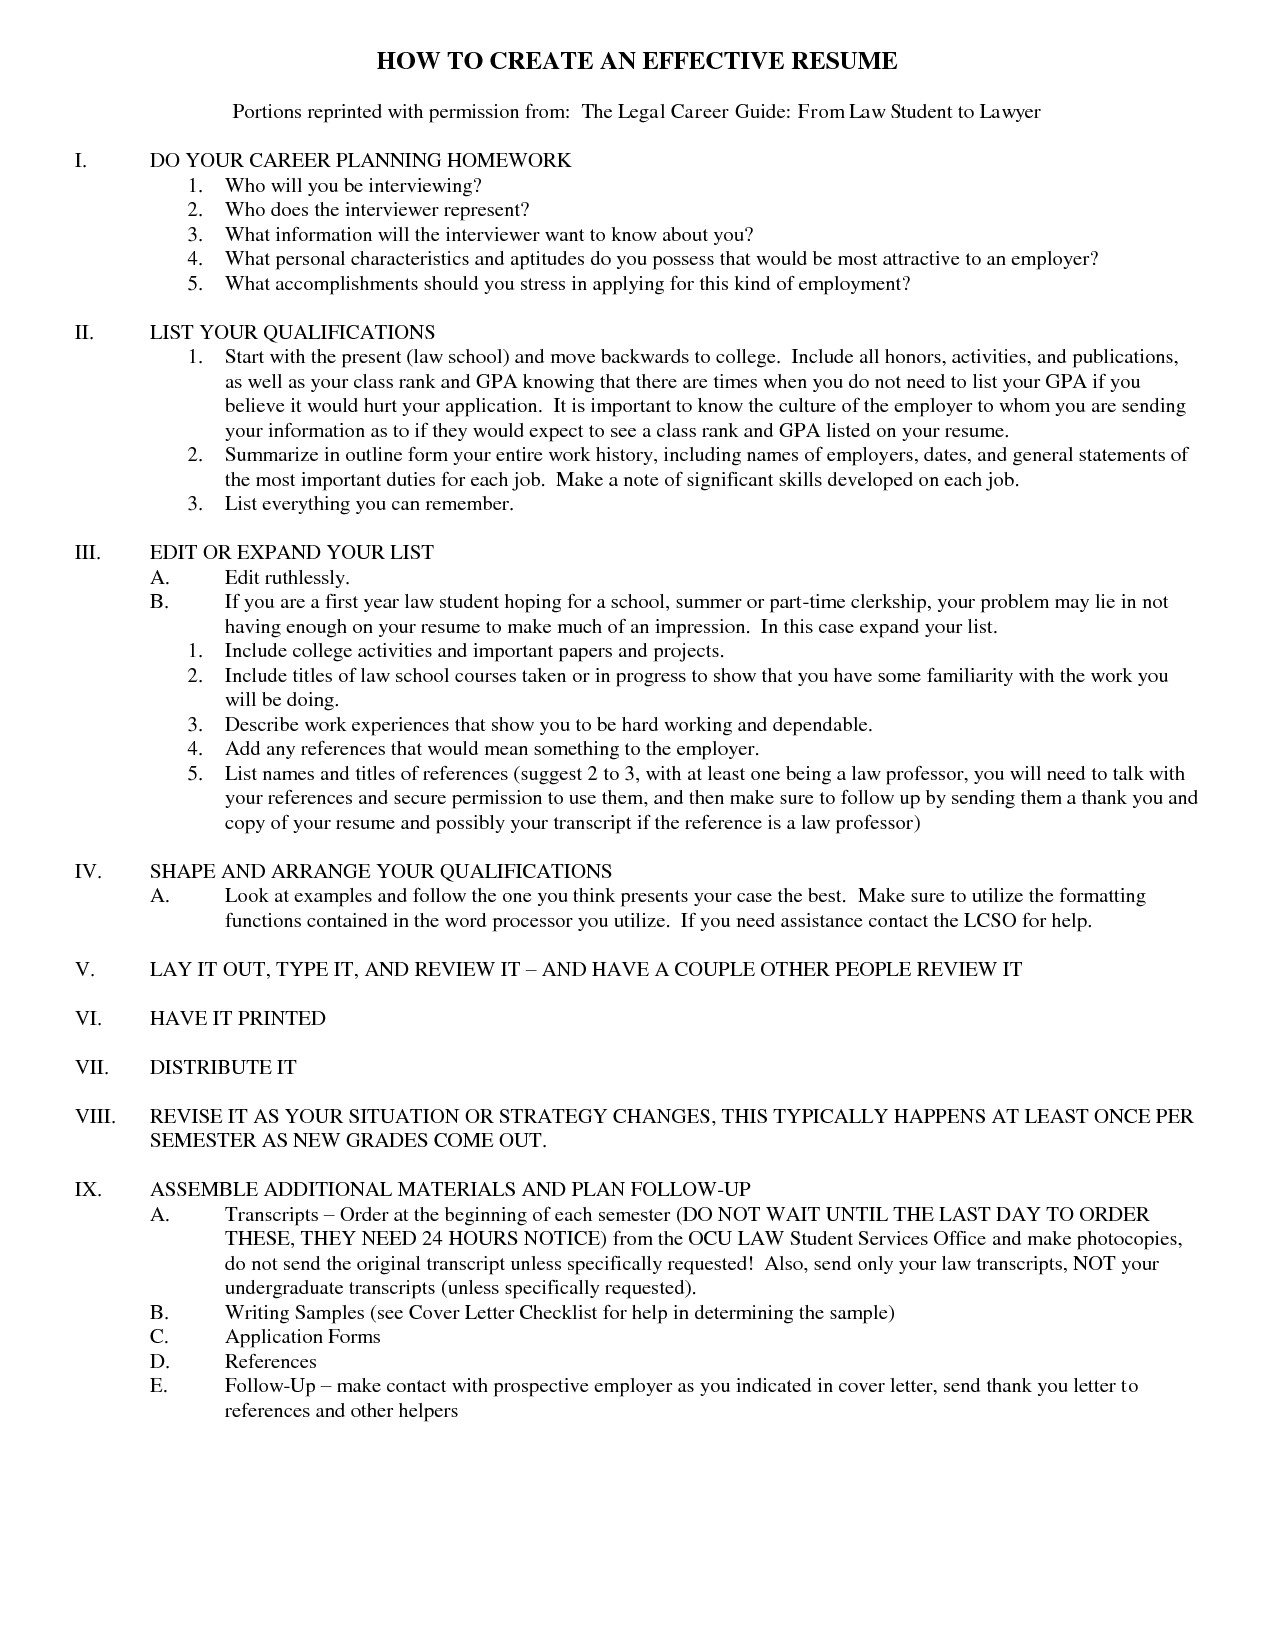 effective resume templates 2